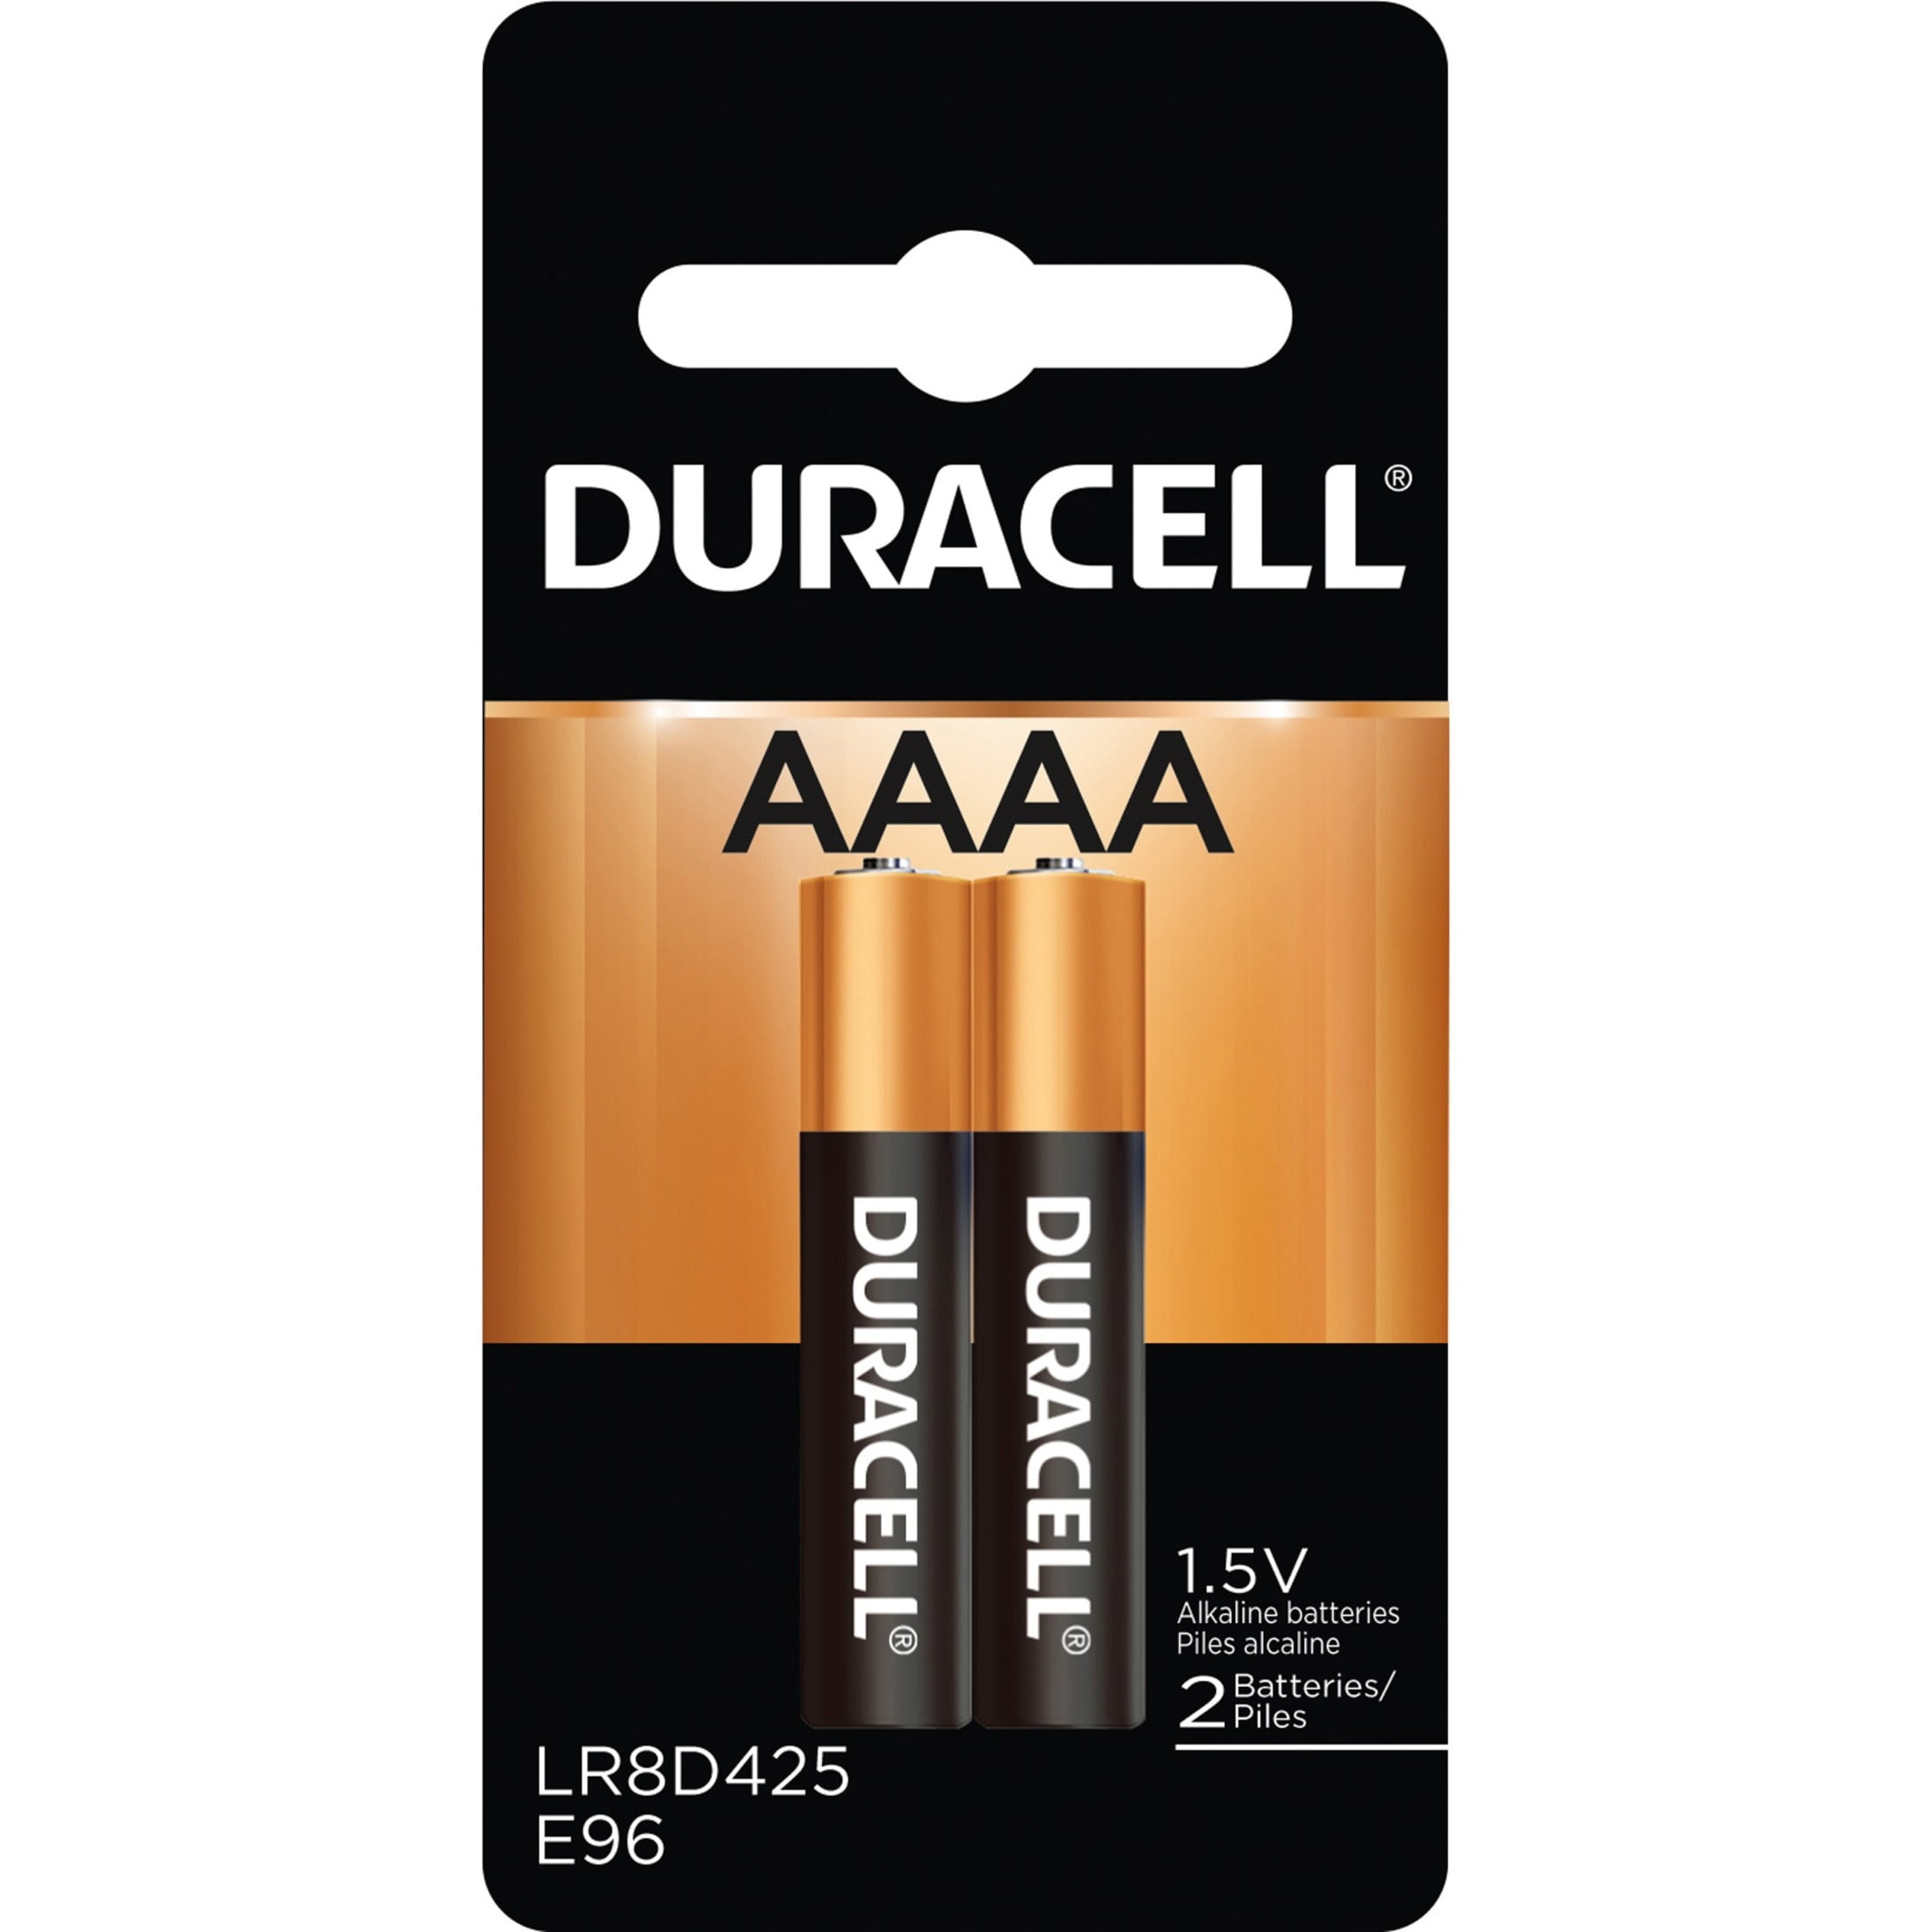 AAAA Battery - Alkaline